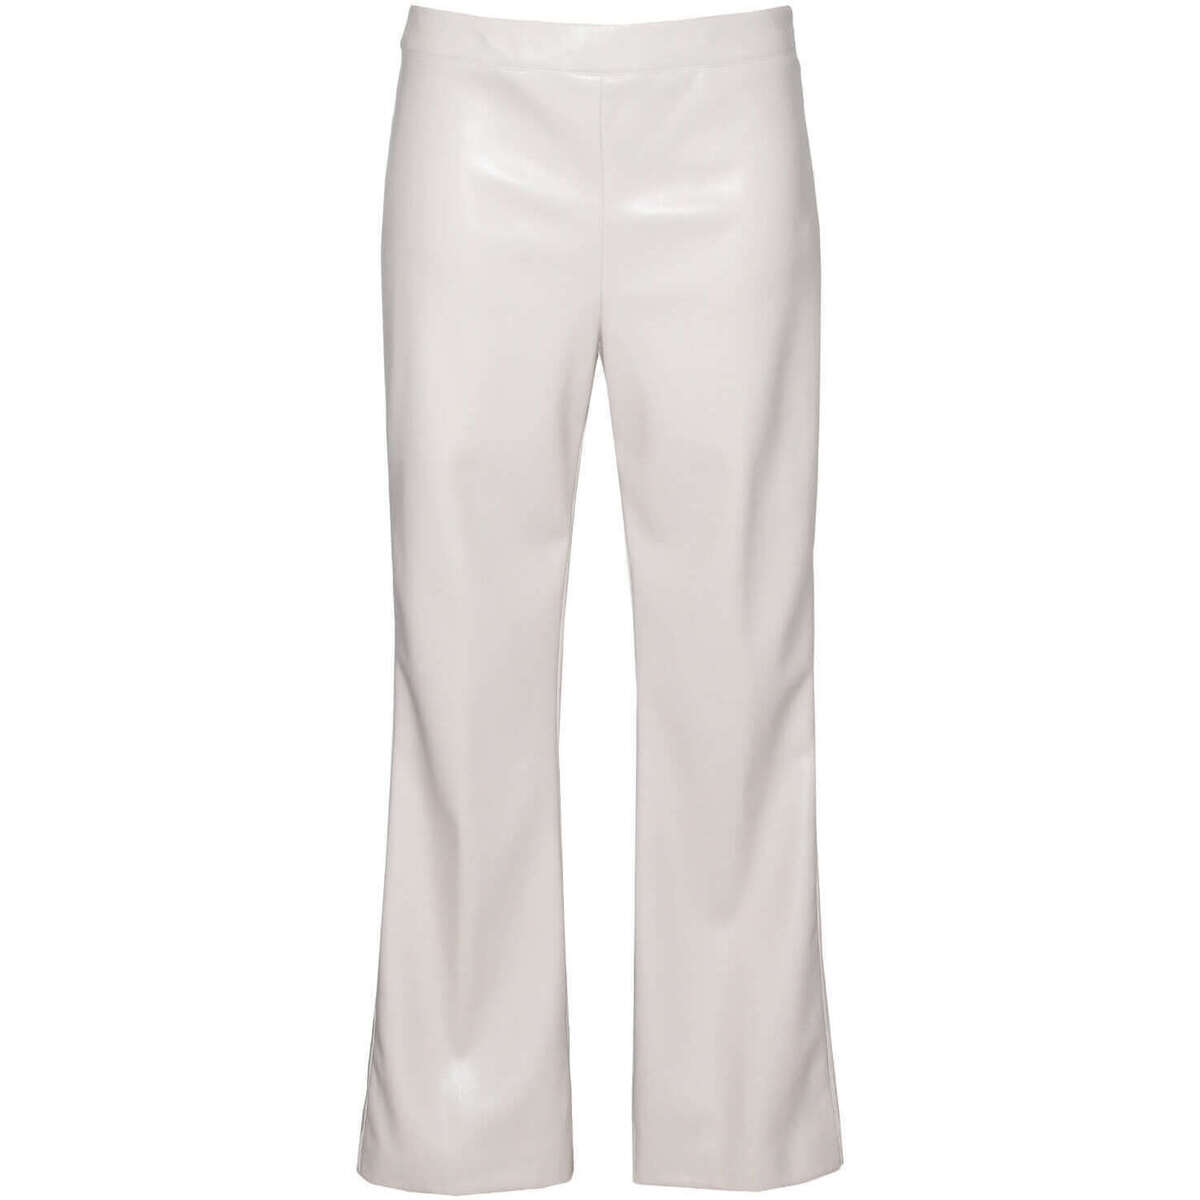 Vêtements Femme Pantalons Jucca  Blanc